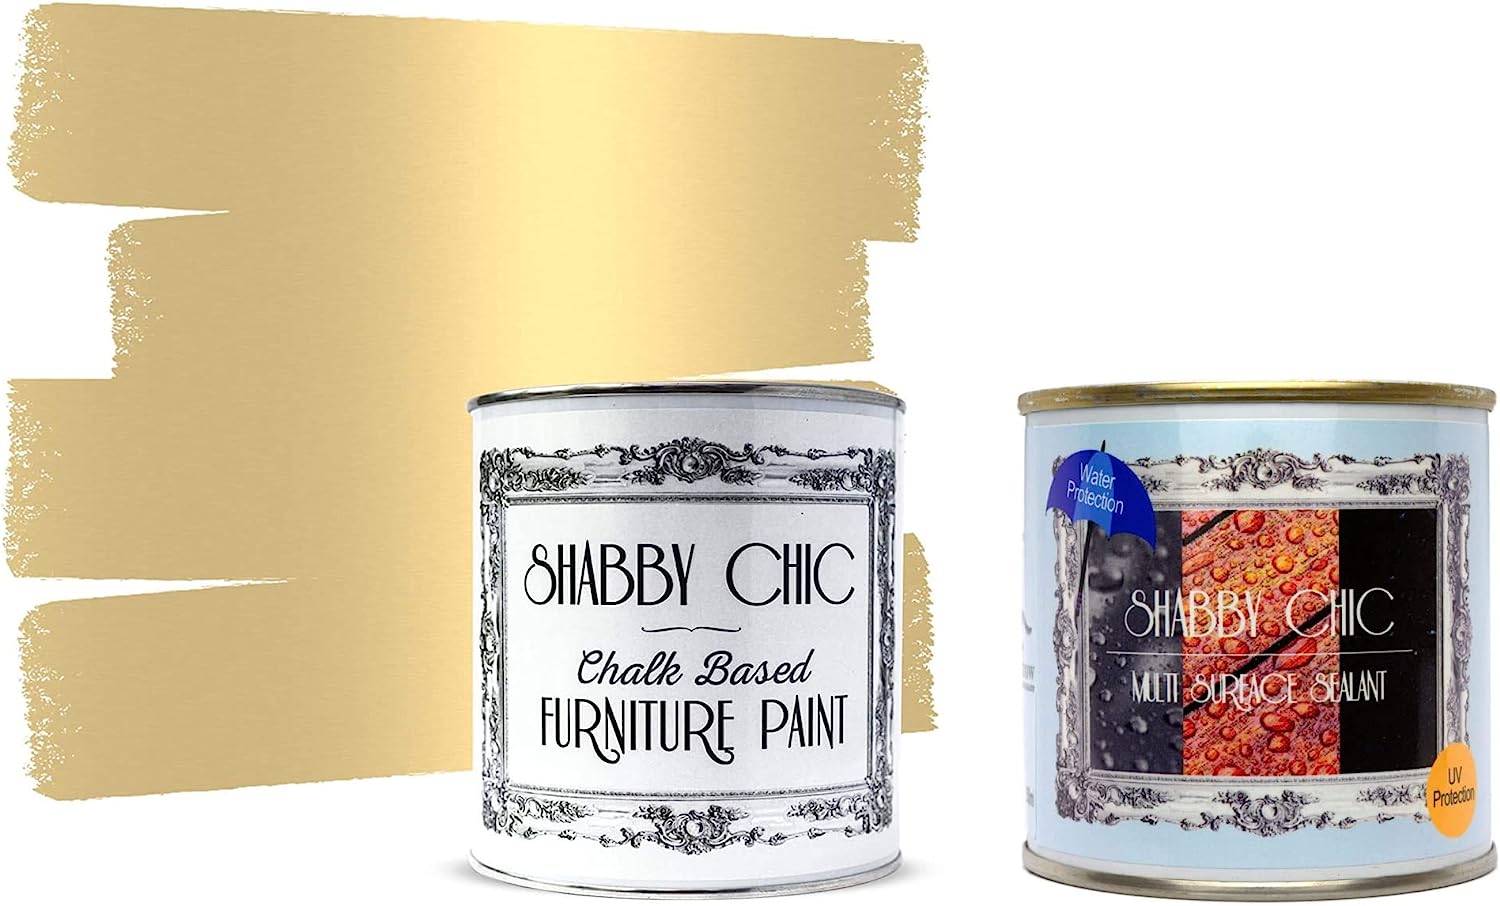 Shabby Chic Chalk Based Furniture Paint - 8.5oz [...]